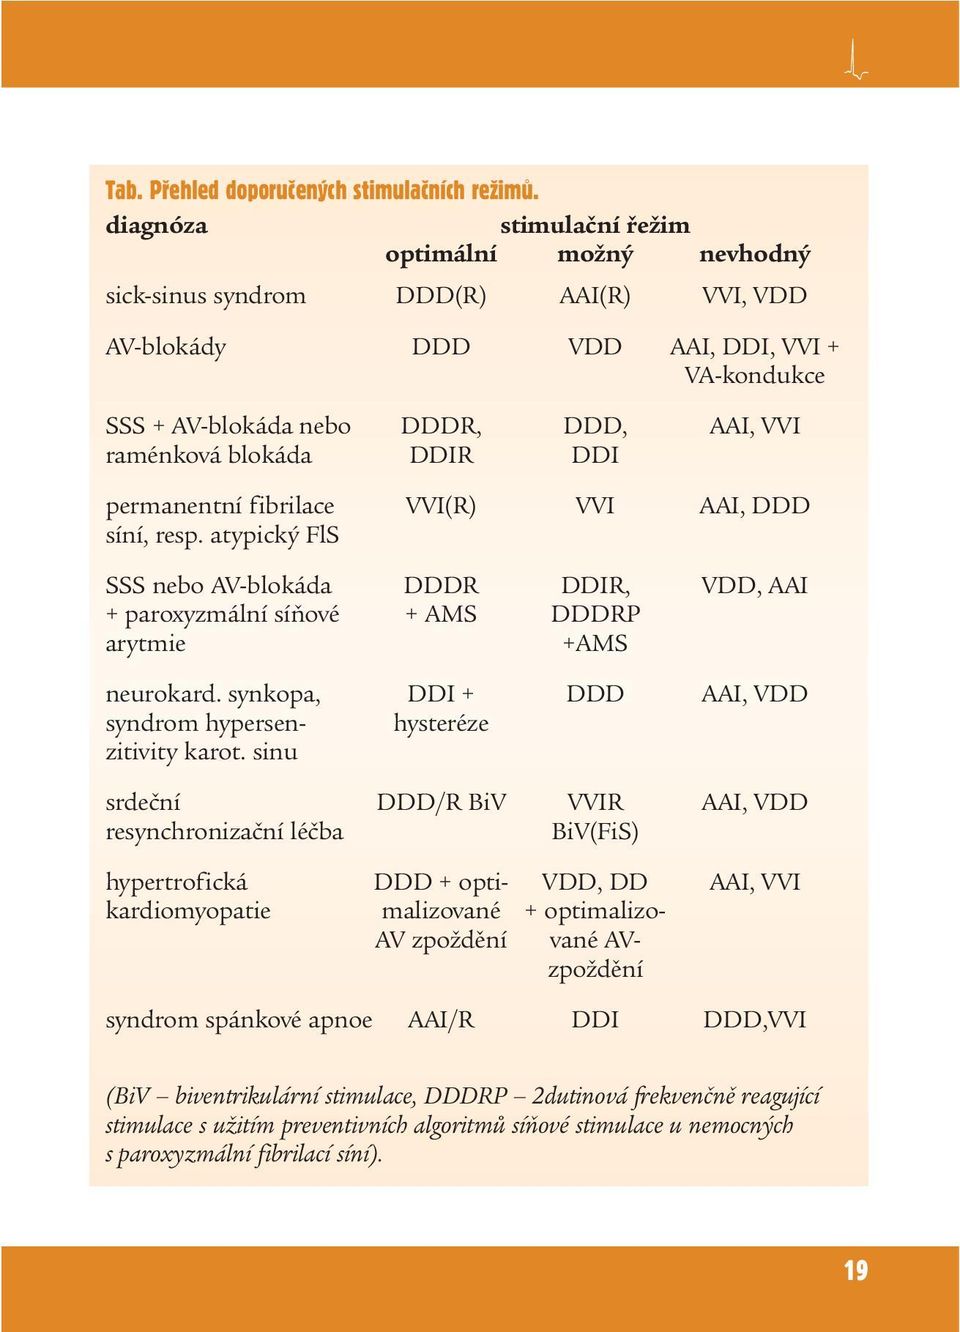 DDIR DDI permanentní fibrilace VVI(R) VVI AAI, DDD síní, resp. atypický FlS SSS nebo AV-blokáda DDDR DDIR, VDD, AAI + paroxyzmální síňové + AMS DDDRP arytmie +AMS neurokard.